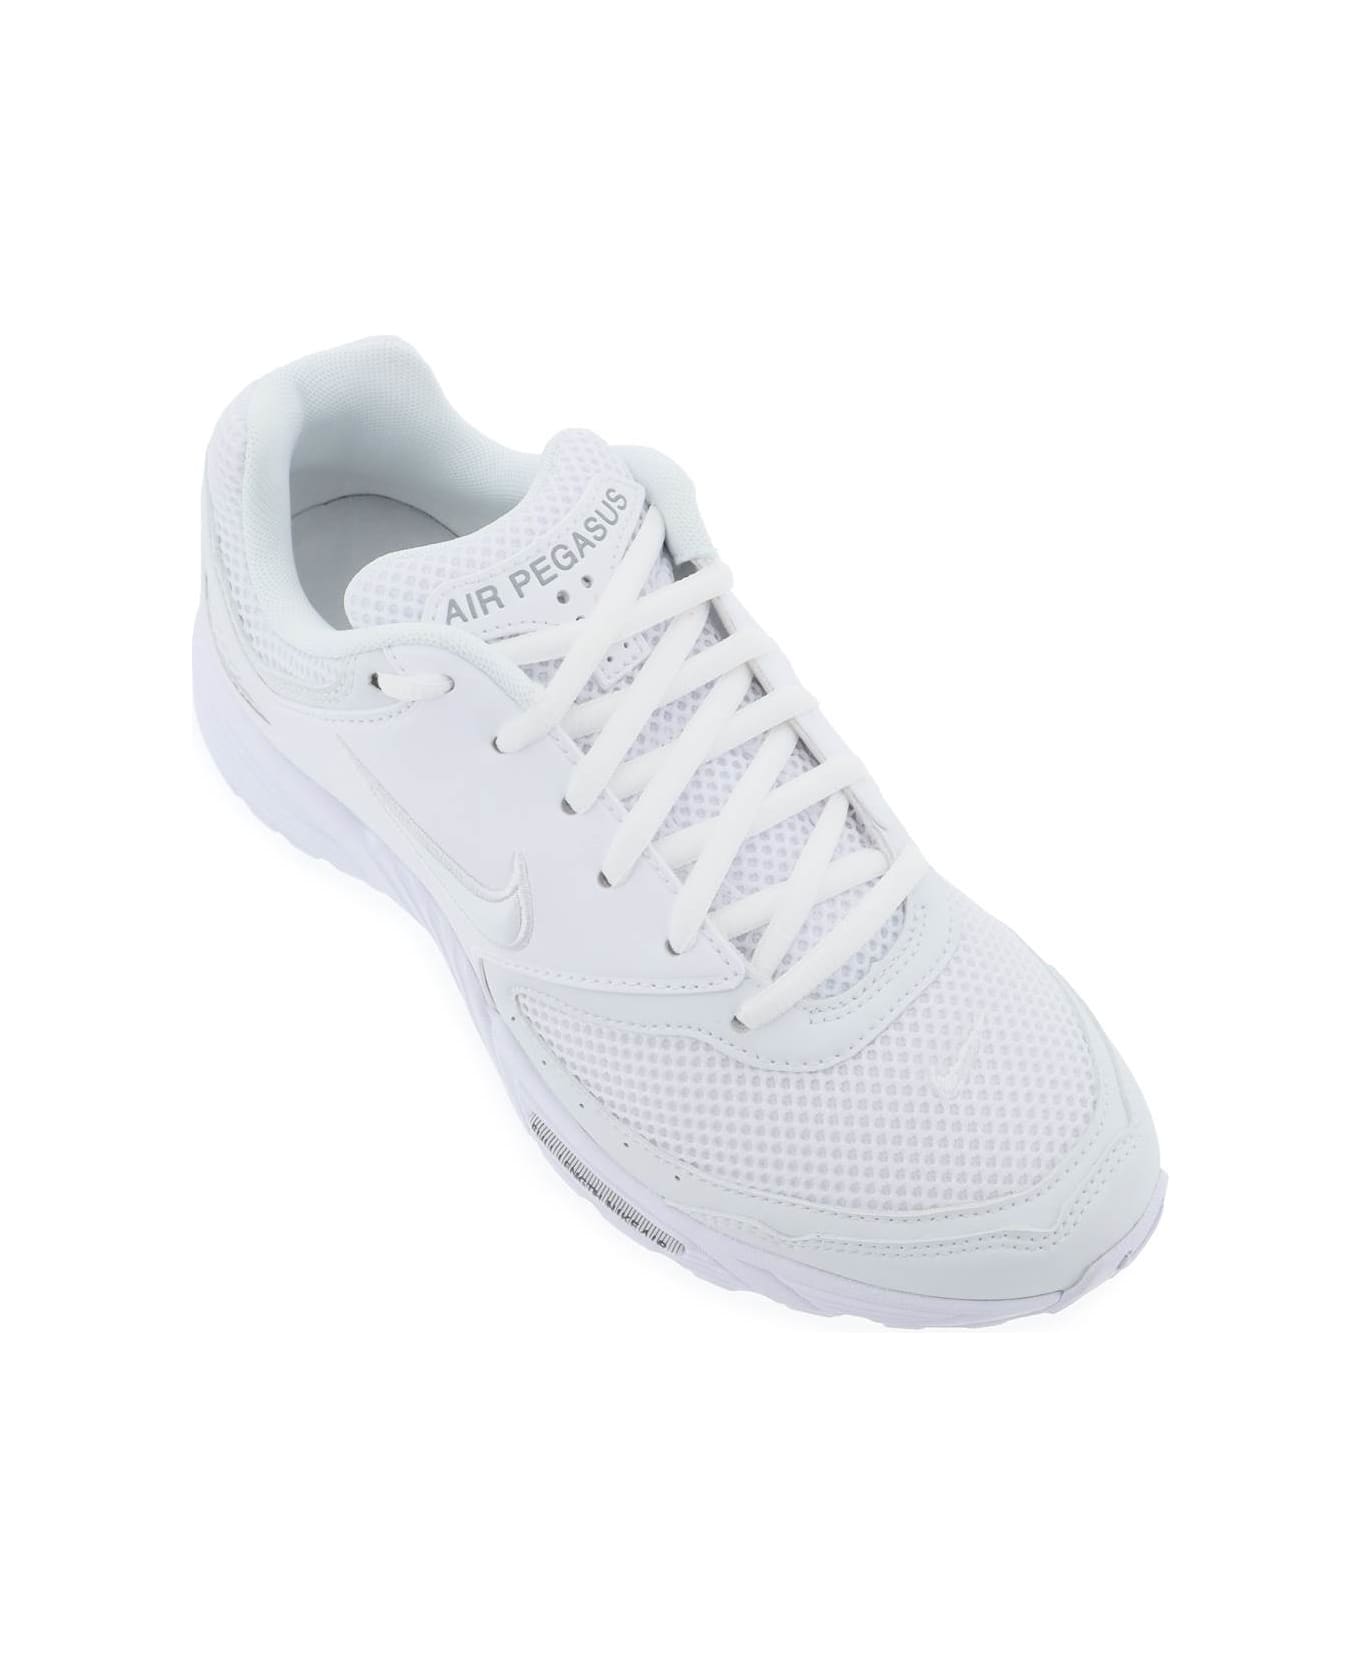 Comme Des Garçons Homme Plus Air Pegasus 2005 Sp Sneakers X Nike - WHITE (White) スニーカー